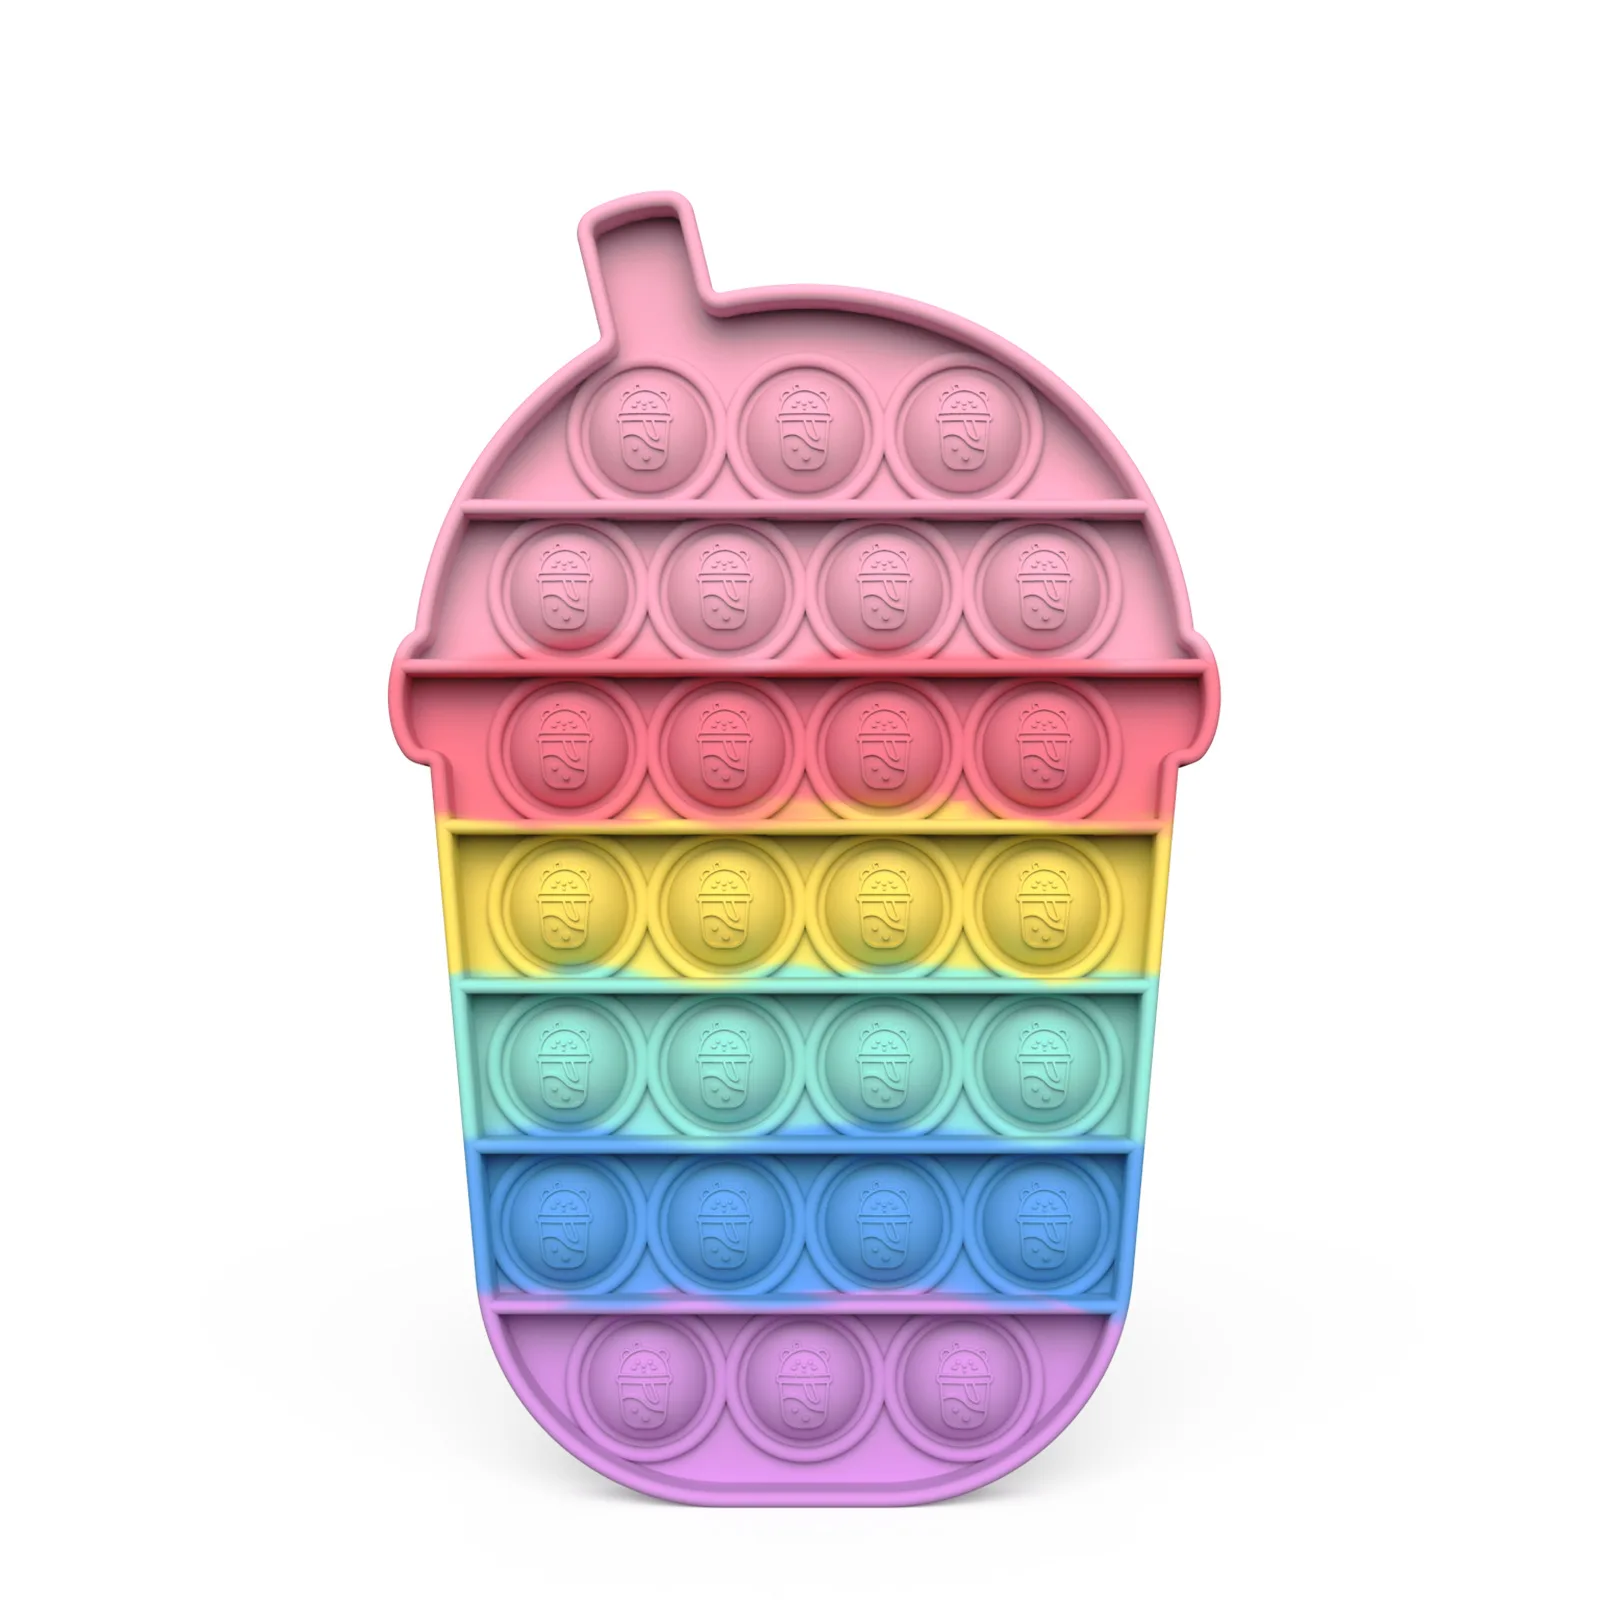 

Fitget Toys Milk Tea Cup Bubble Fidget Sensory Autism Special Needs Stress Reliever Adult Children Squishy Squeeze Toy